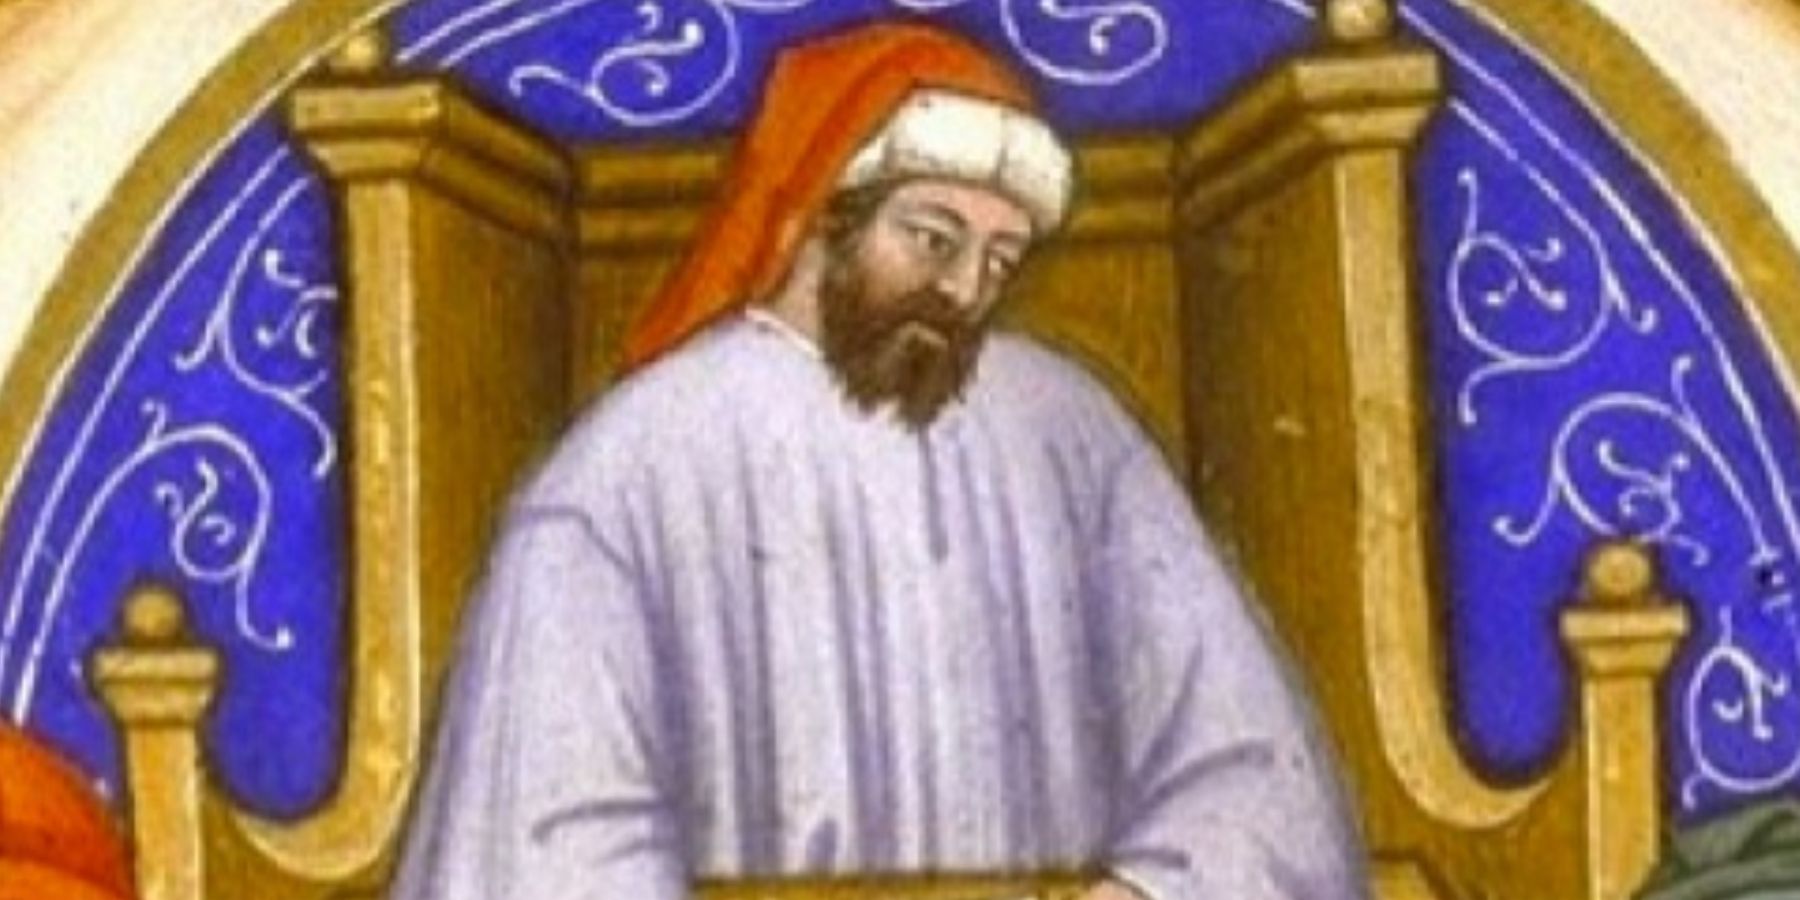 Painting Of Boethius